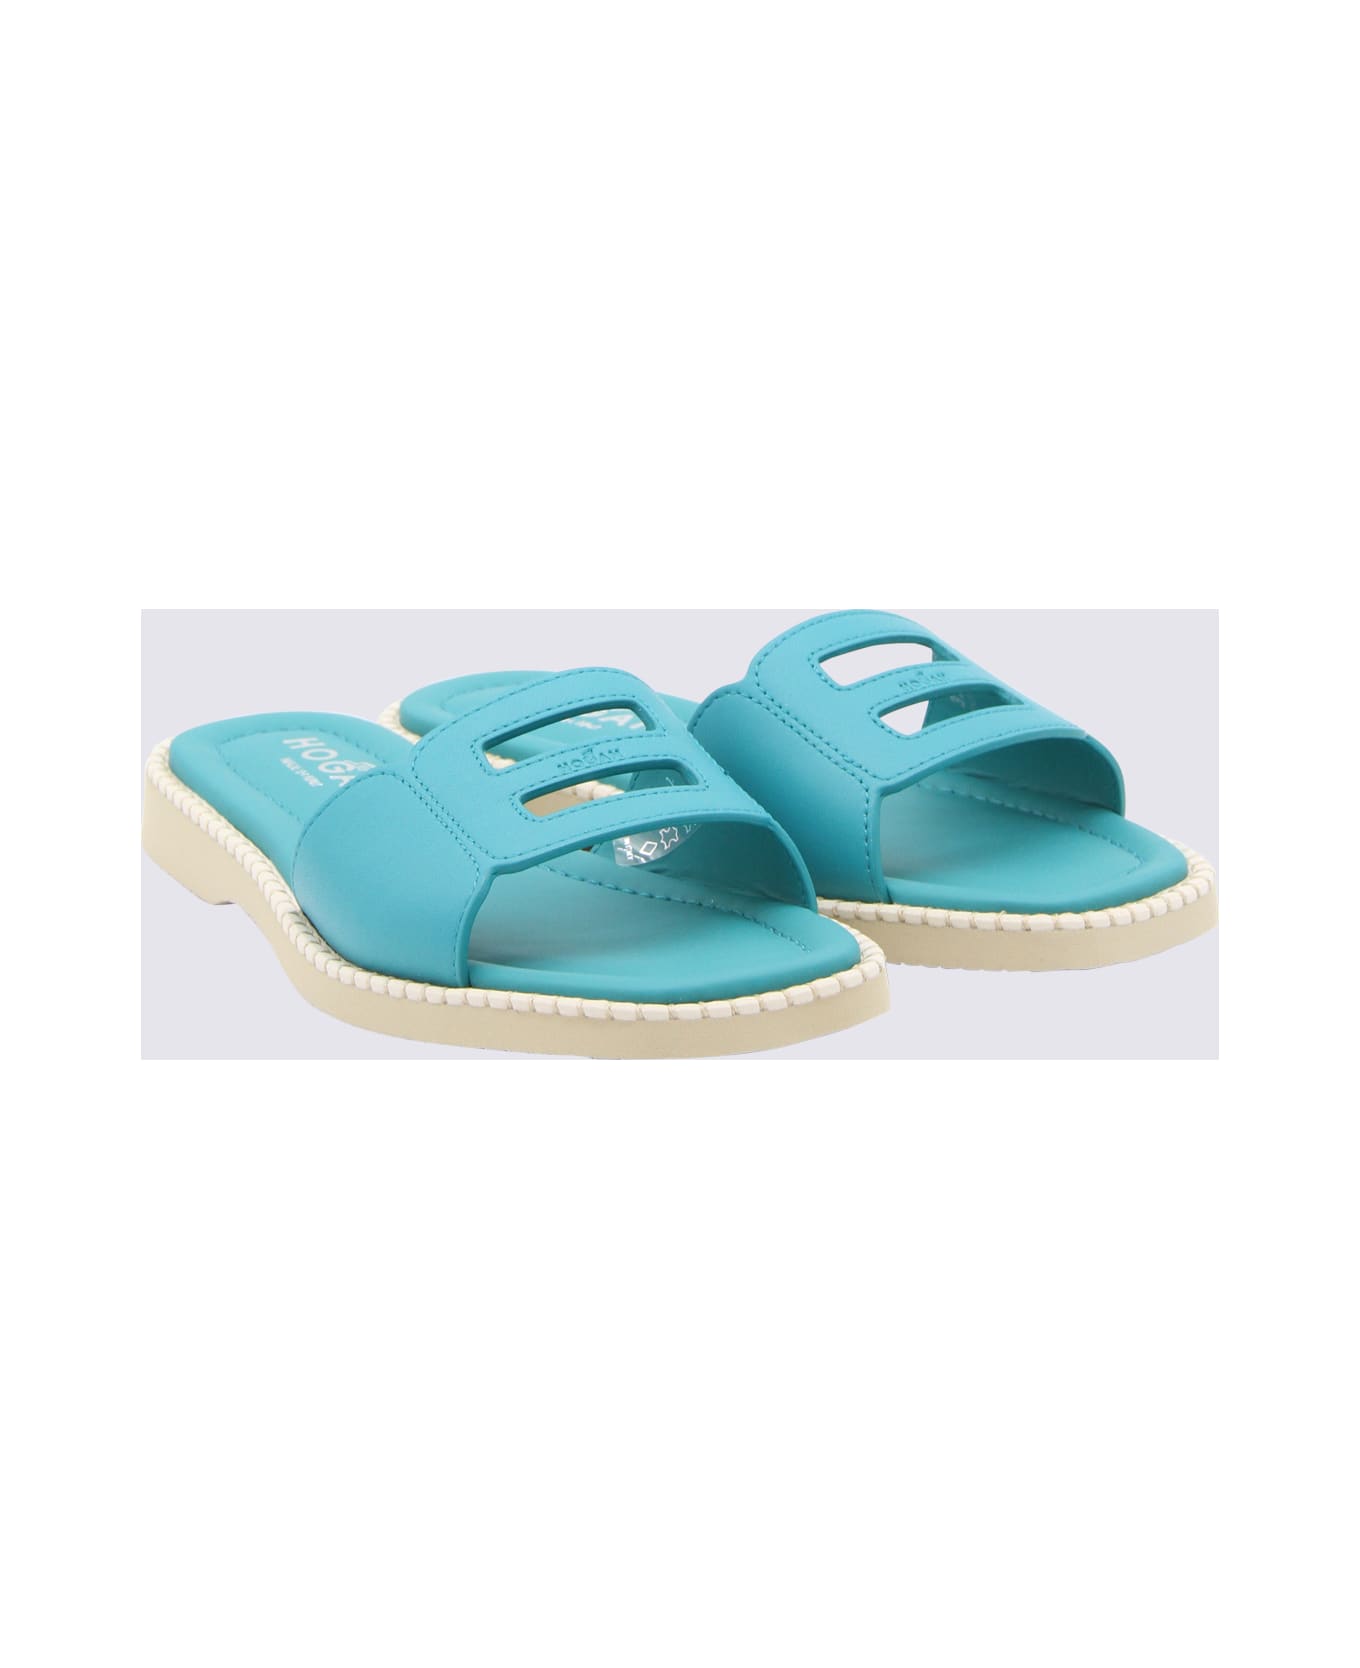 Hogan Turquoise Leather H638 Flat Sandals - Turquoise